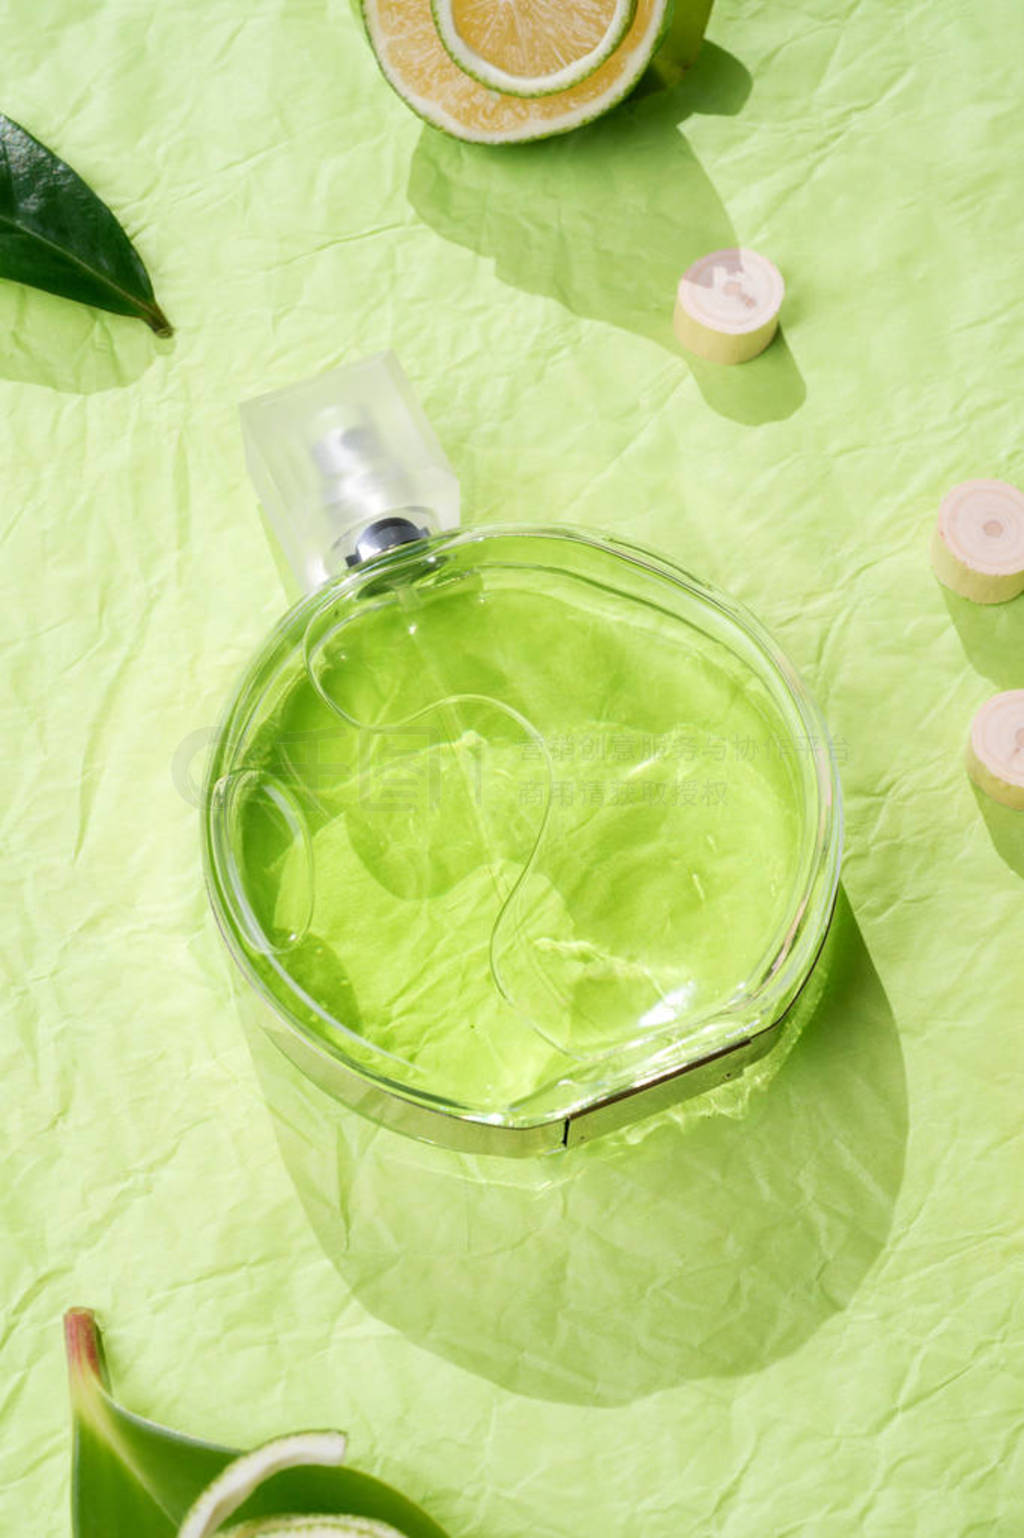 perfume bottle around ingredients on green background.